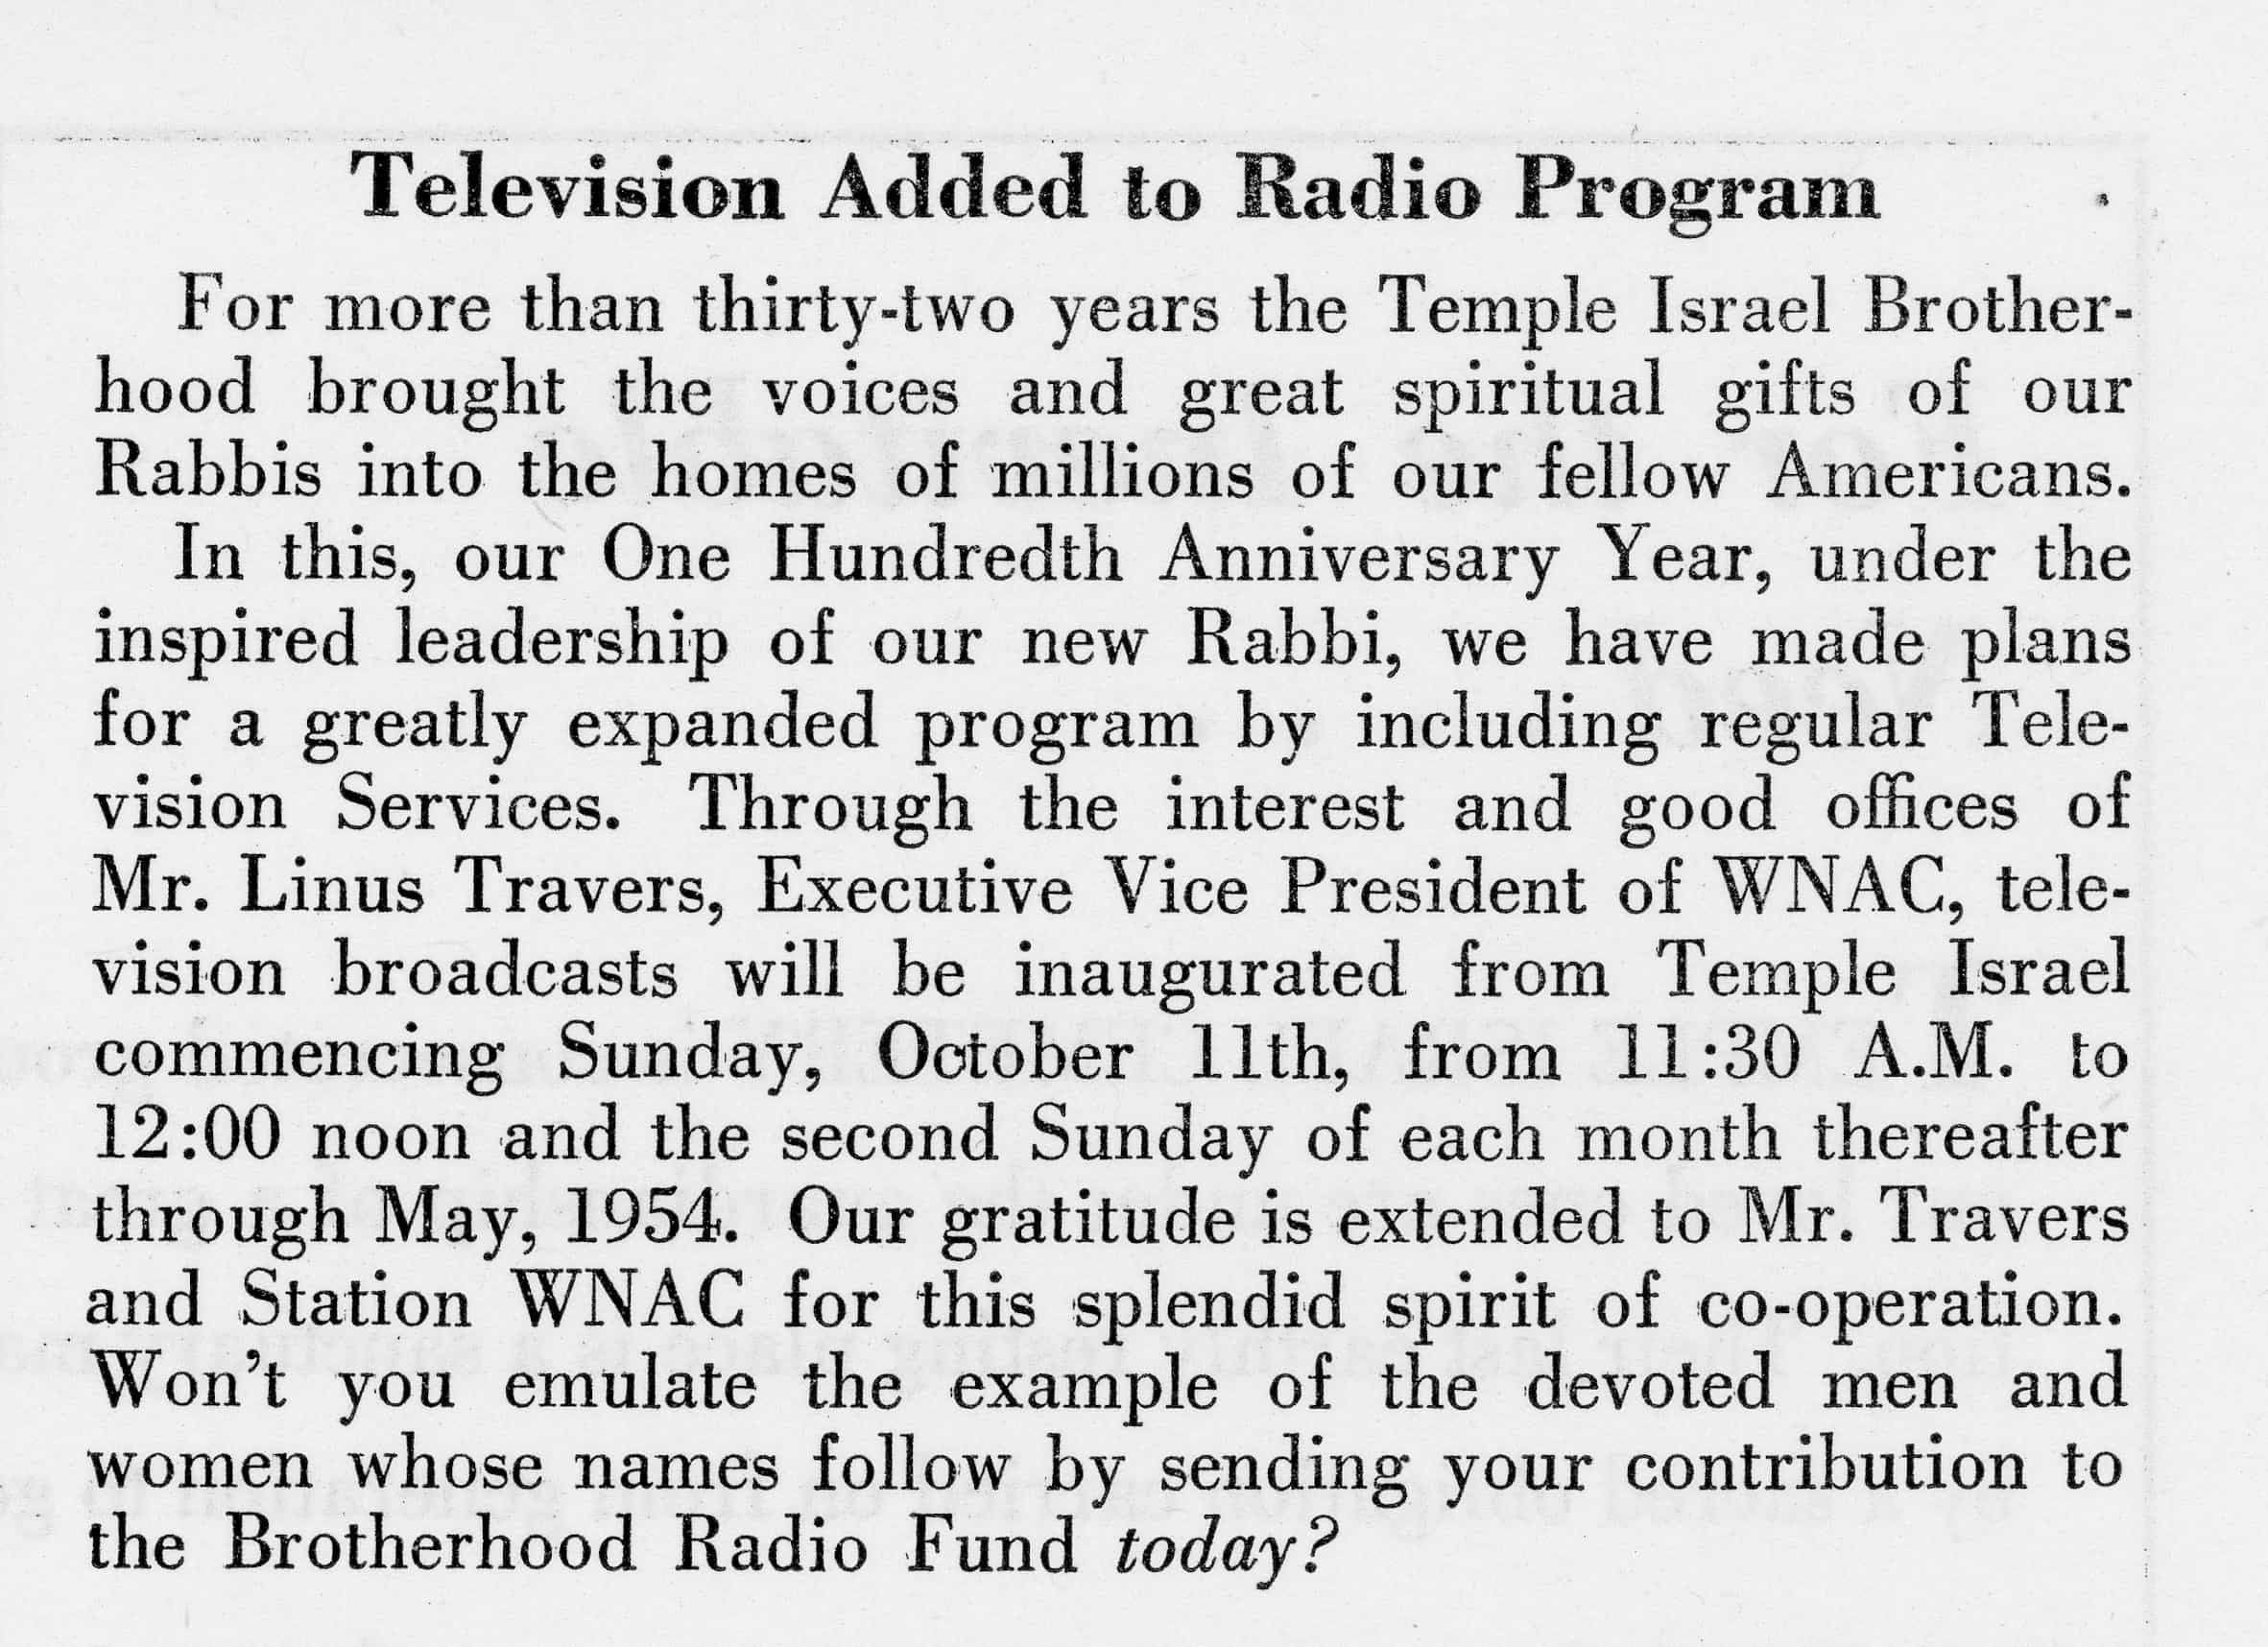 2018-03-29_TI television program advertisement_9-25-1953 TI Bulletin_edited